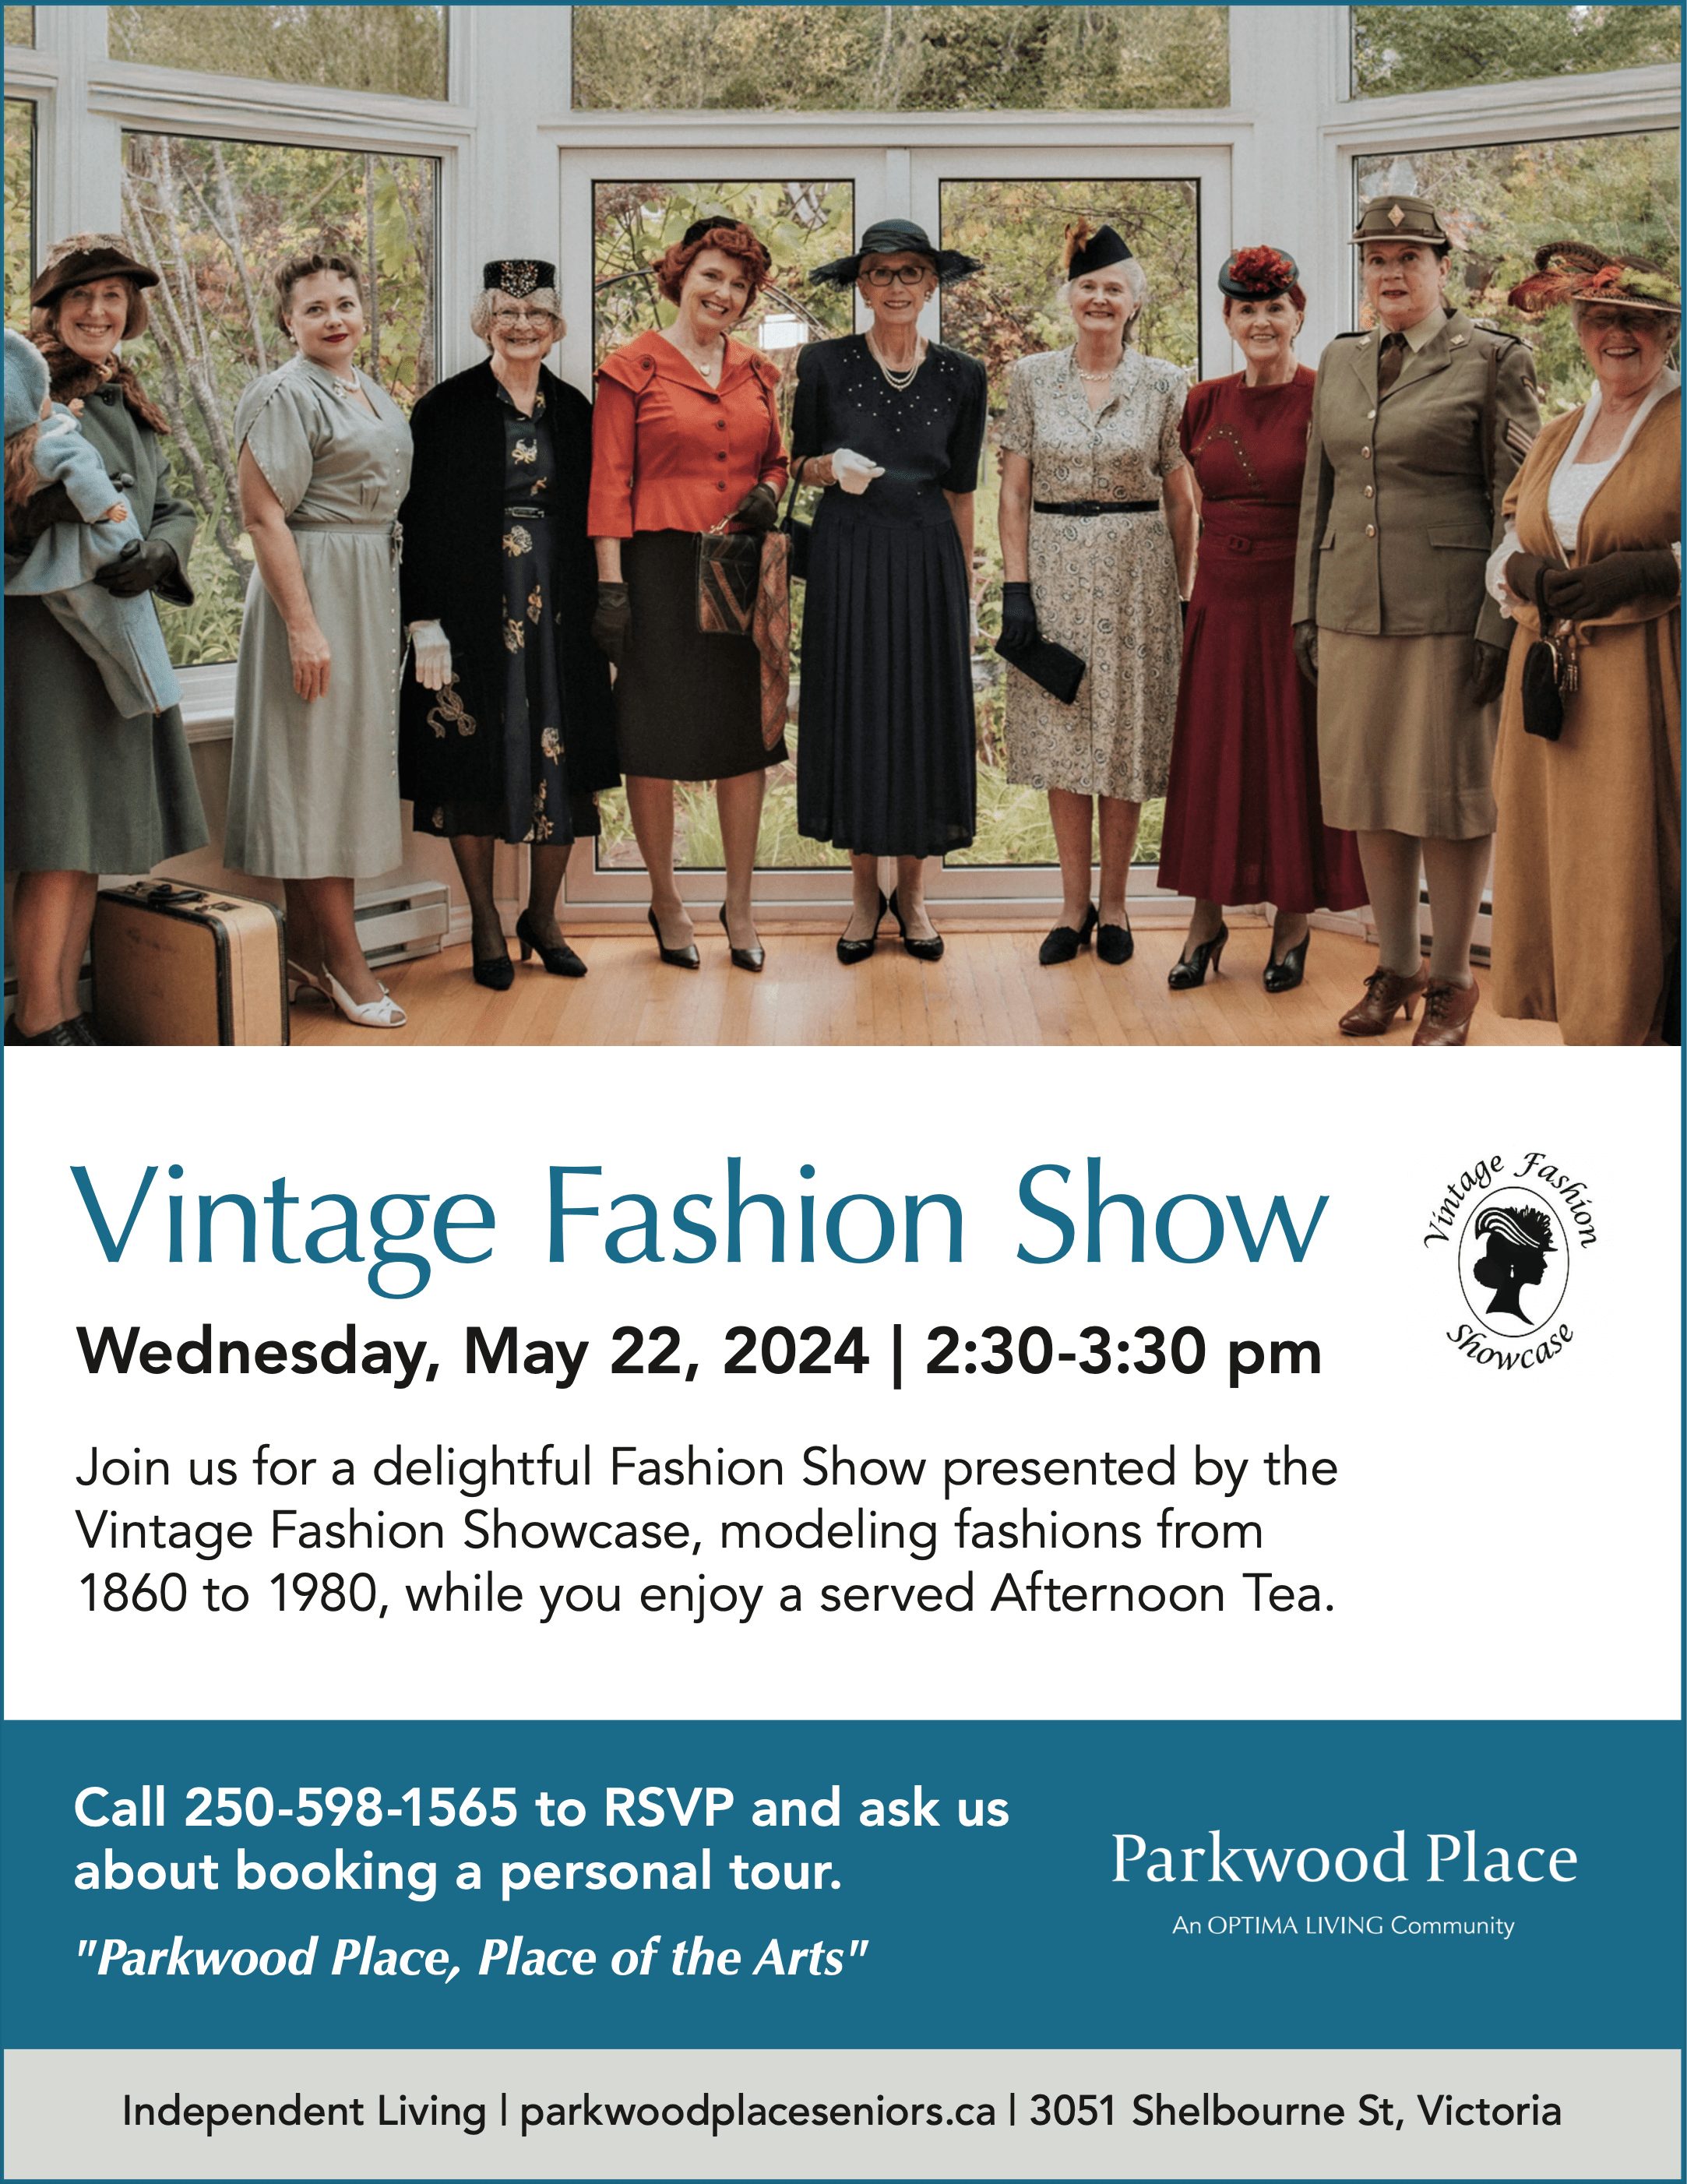 Vintage fashion show flyer